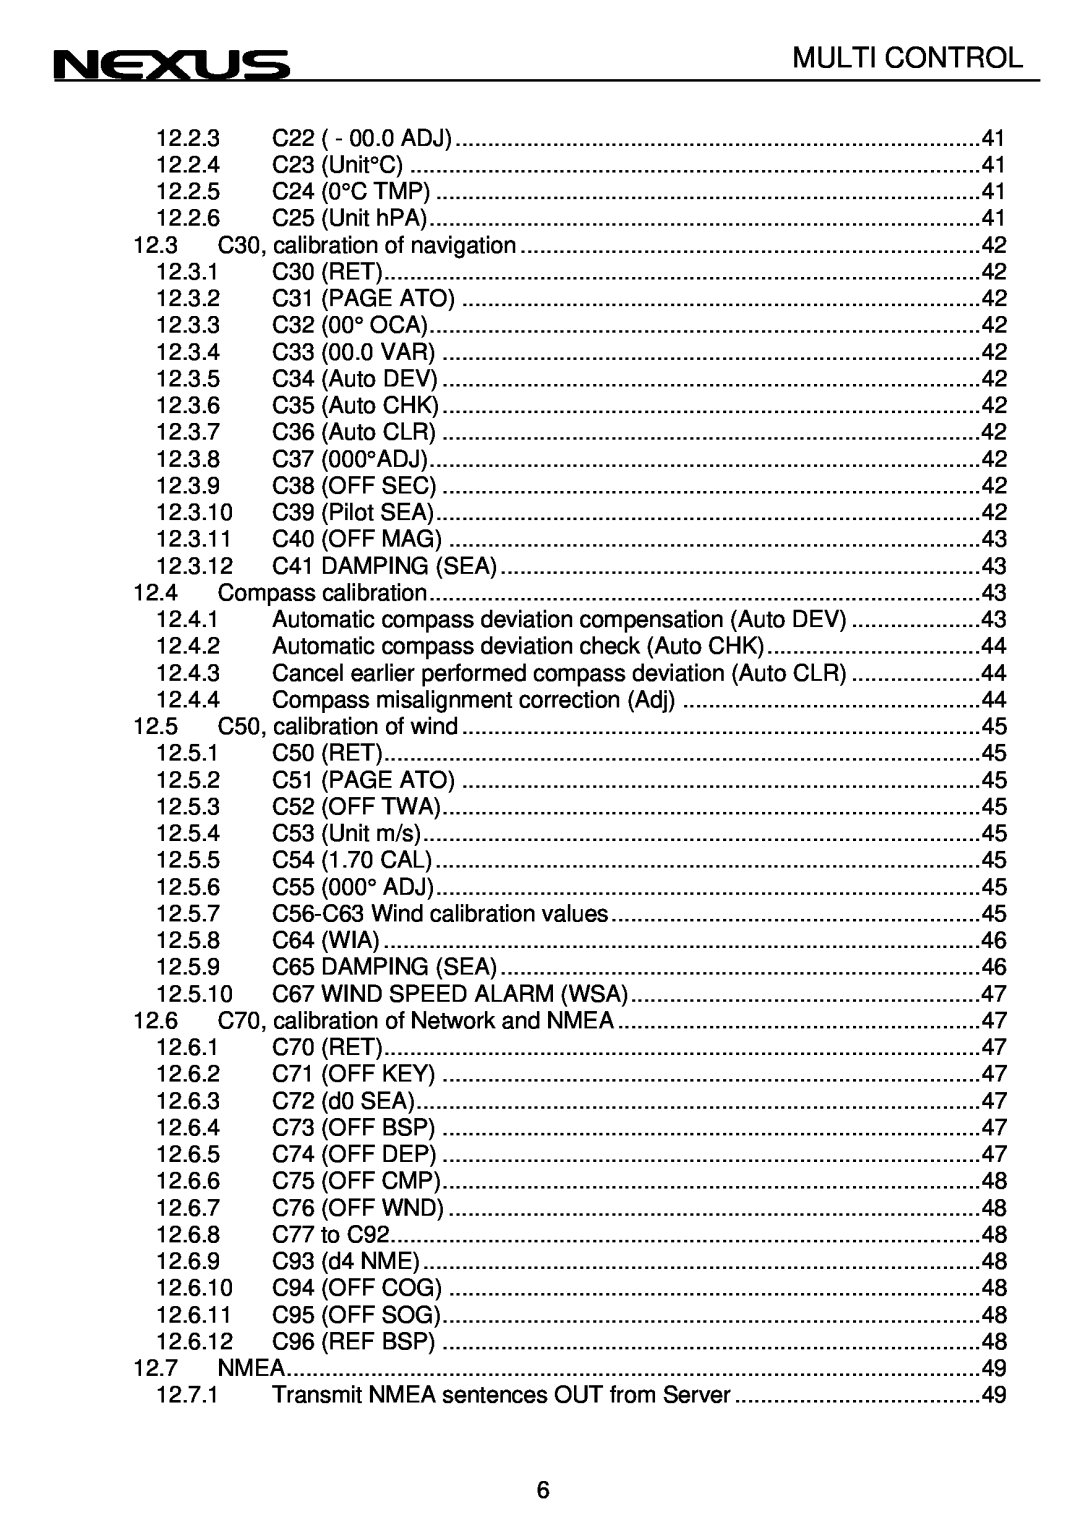 Nexus 21 Multi Control operation manual 12.2.3 